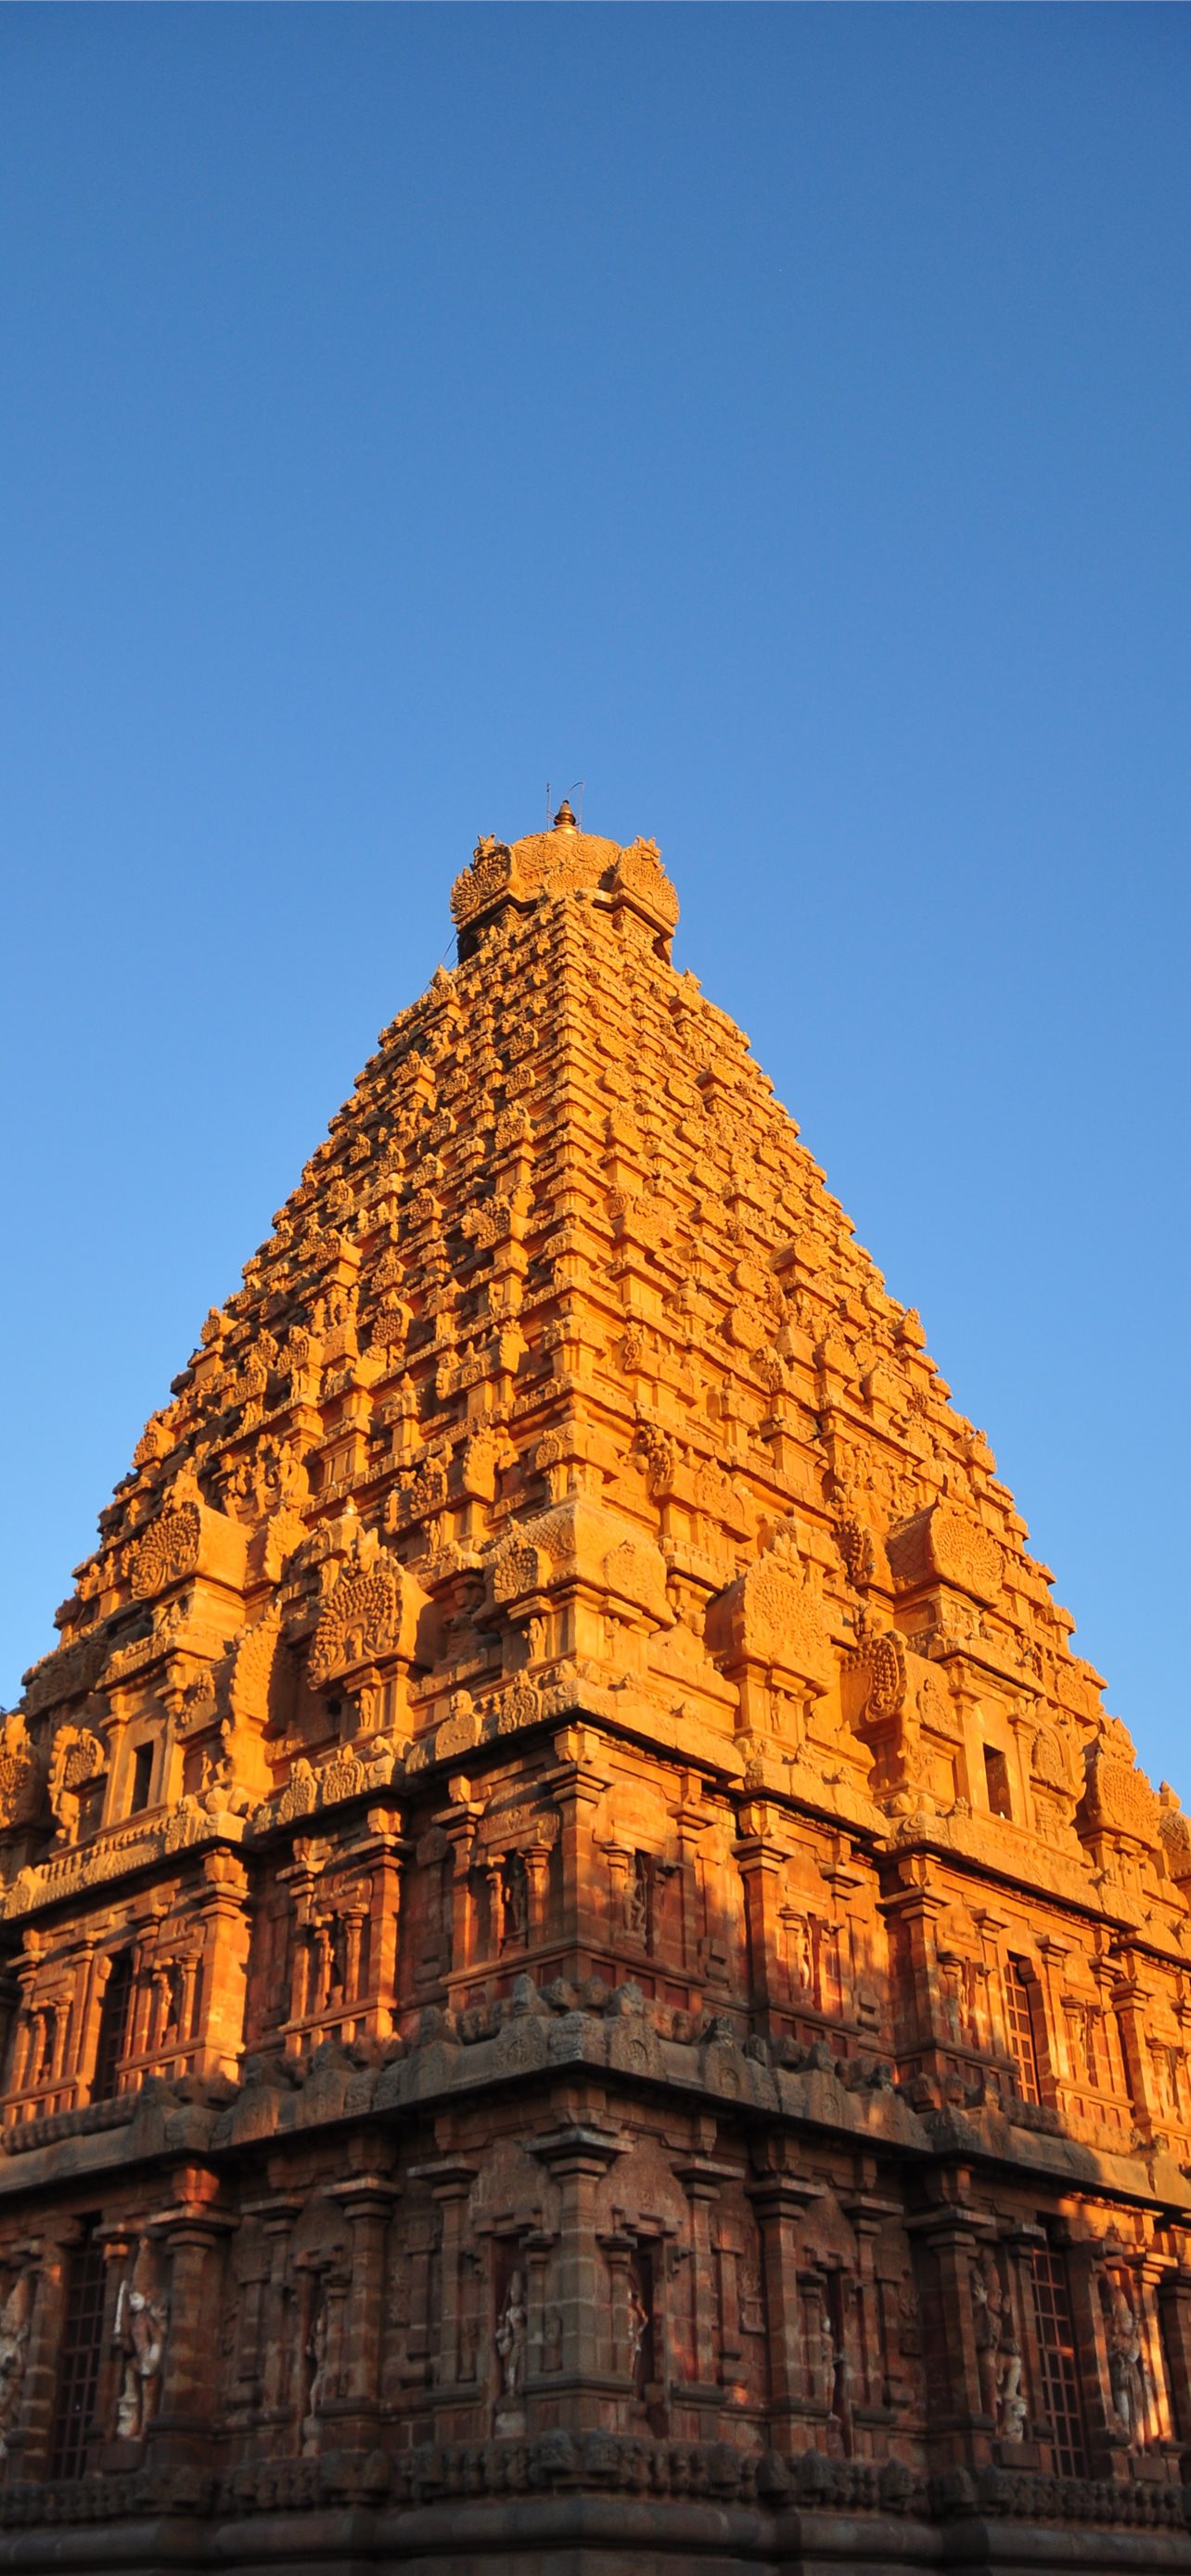 Thanjavur Temple Photos teahub io iPhone Wallpapers Free Download